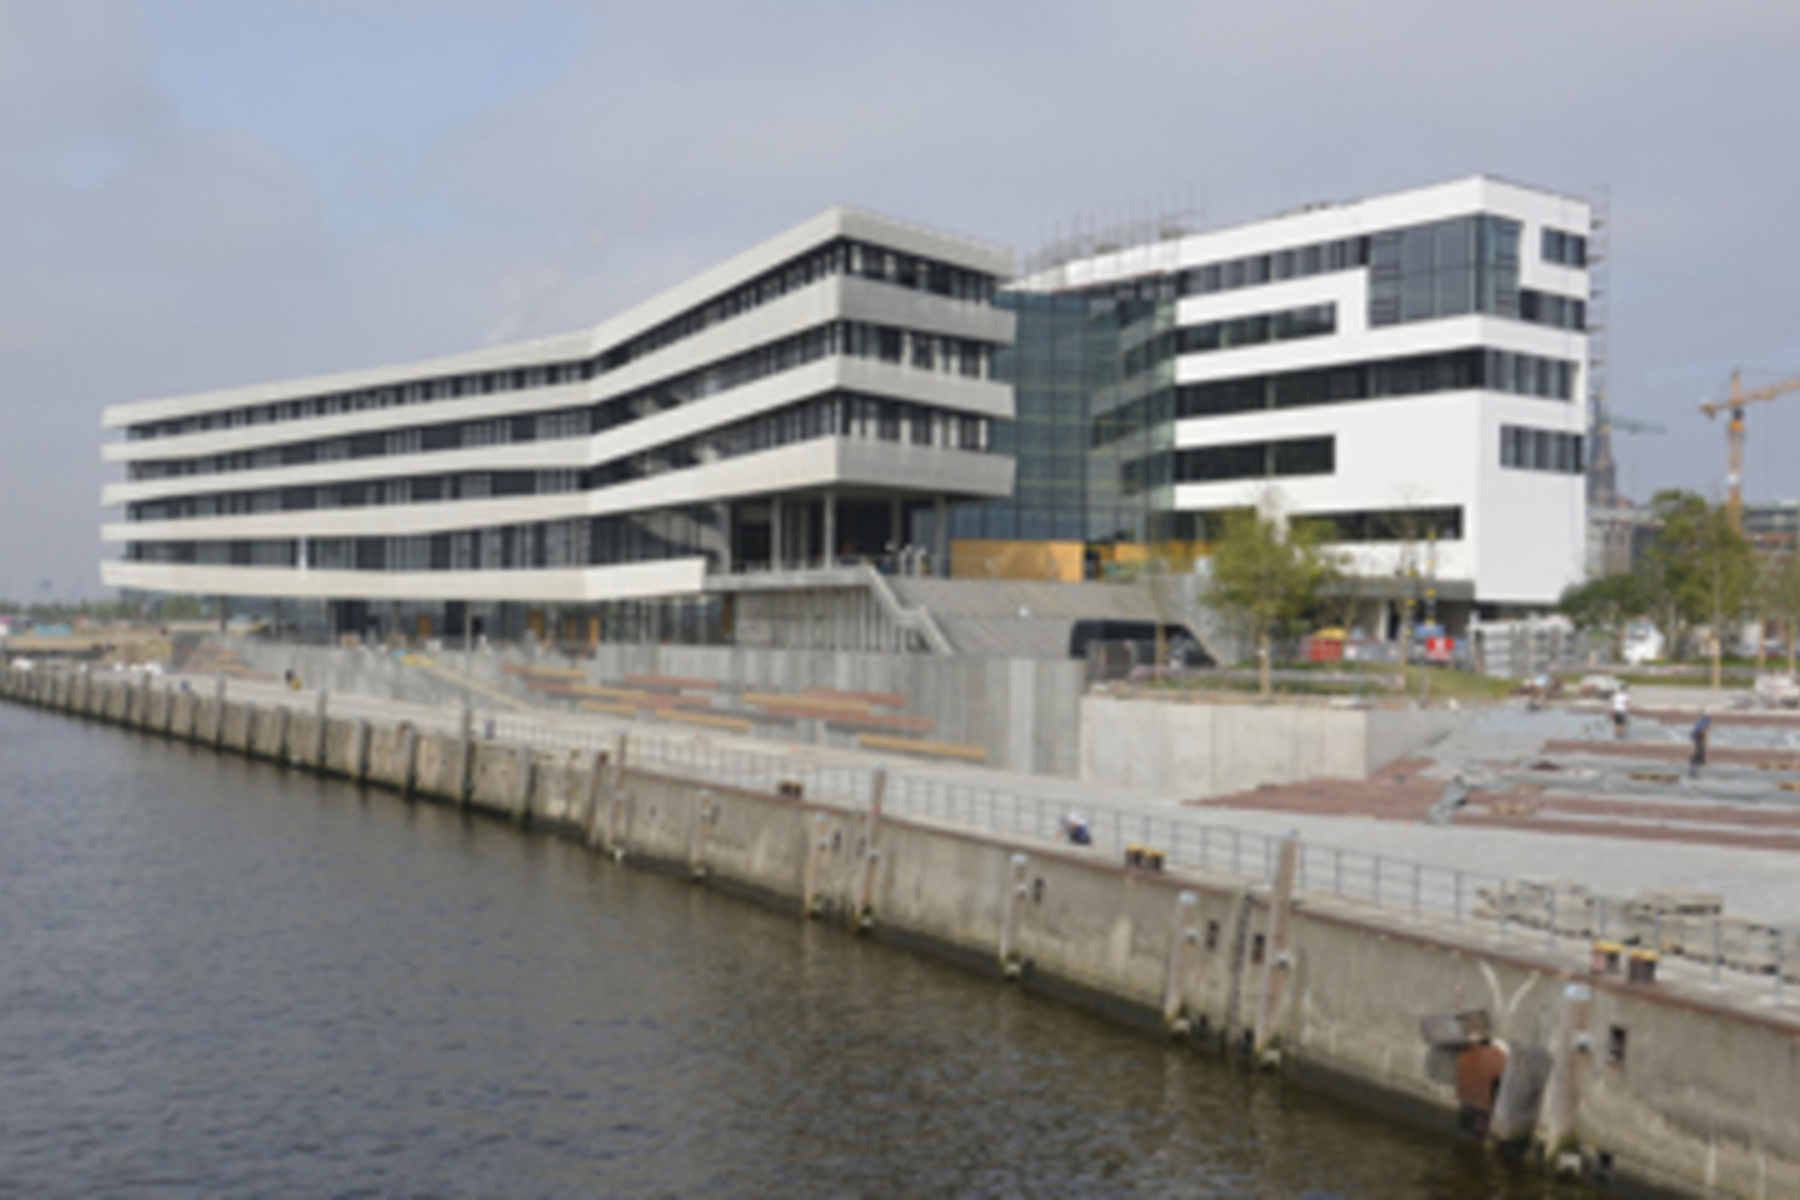 HafenCity Universität Hamburg - University